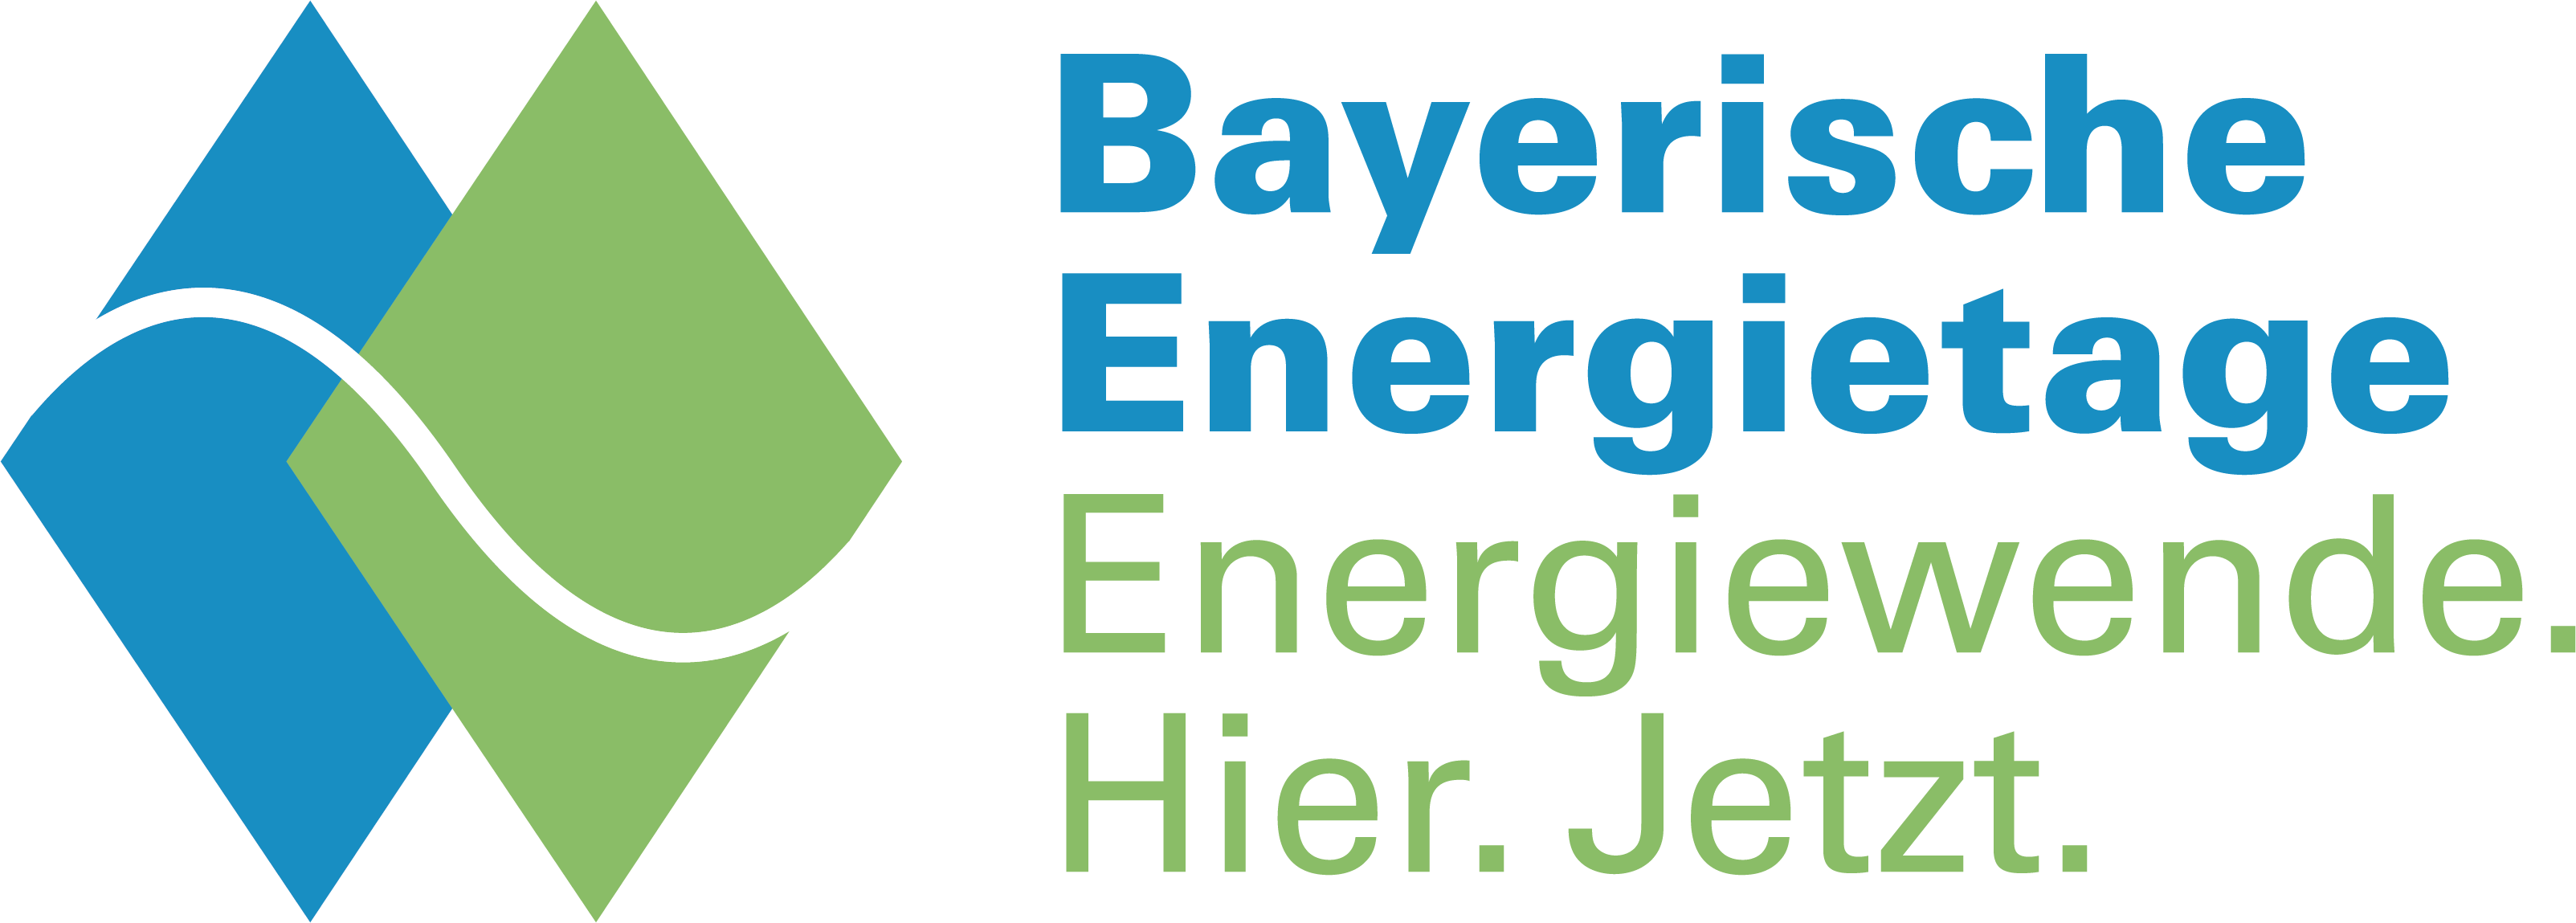 Bayerische Energietage Wortbildmarke Rgb De6705b47e